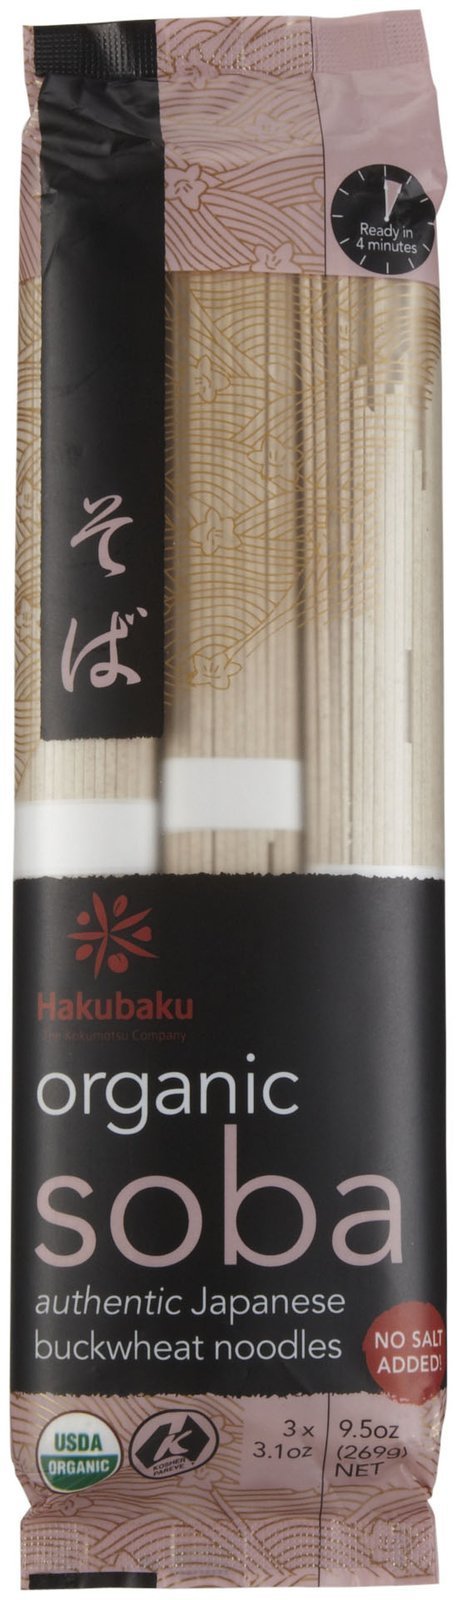 Hakubaku Organic Soba, Authentic Japanese Buckwheat Noodles (no salt added)